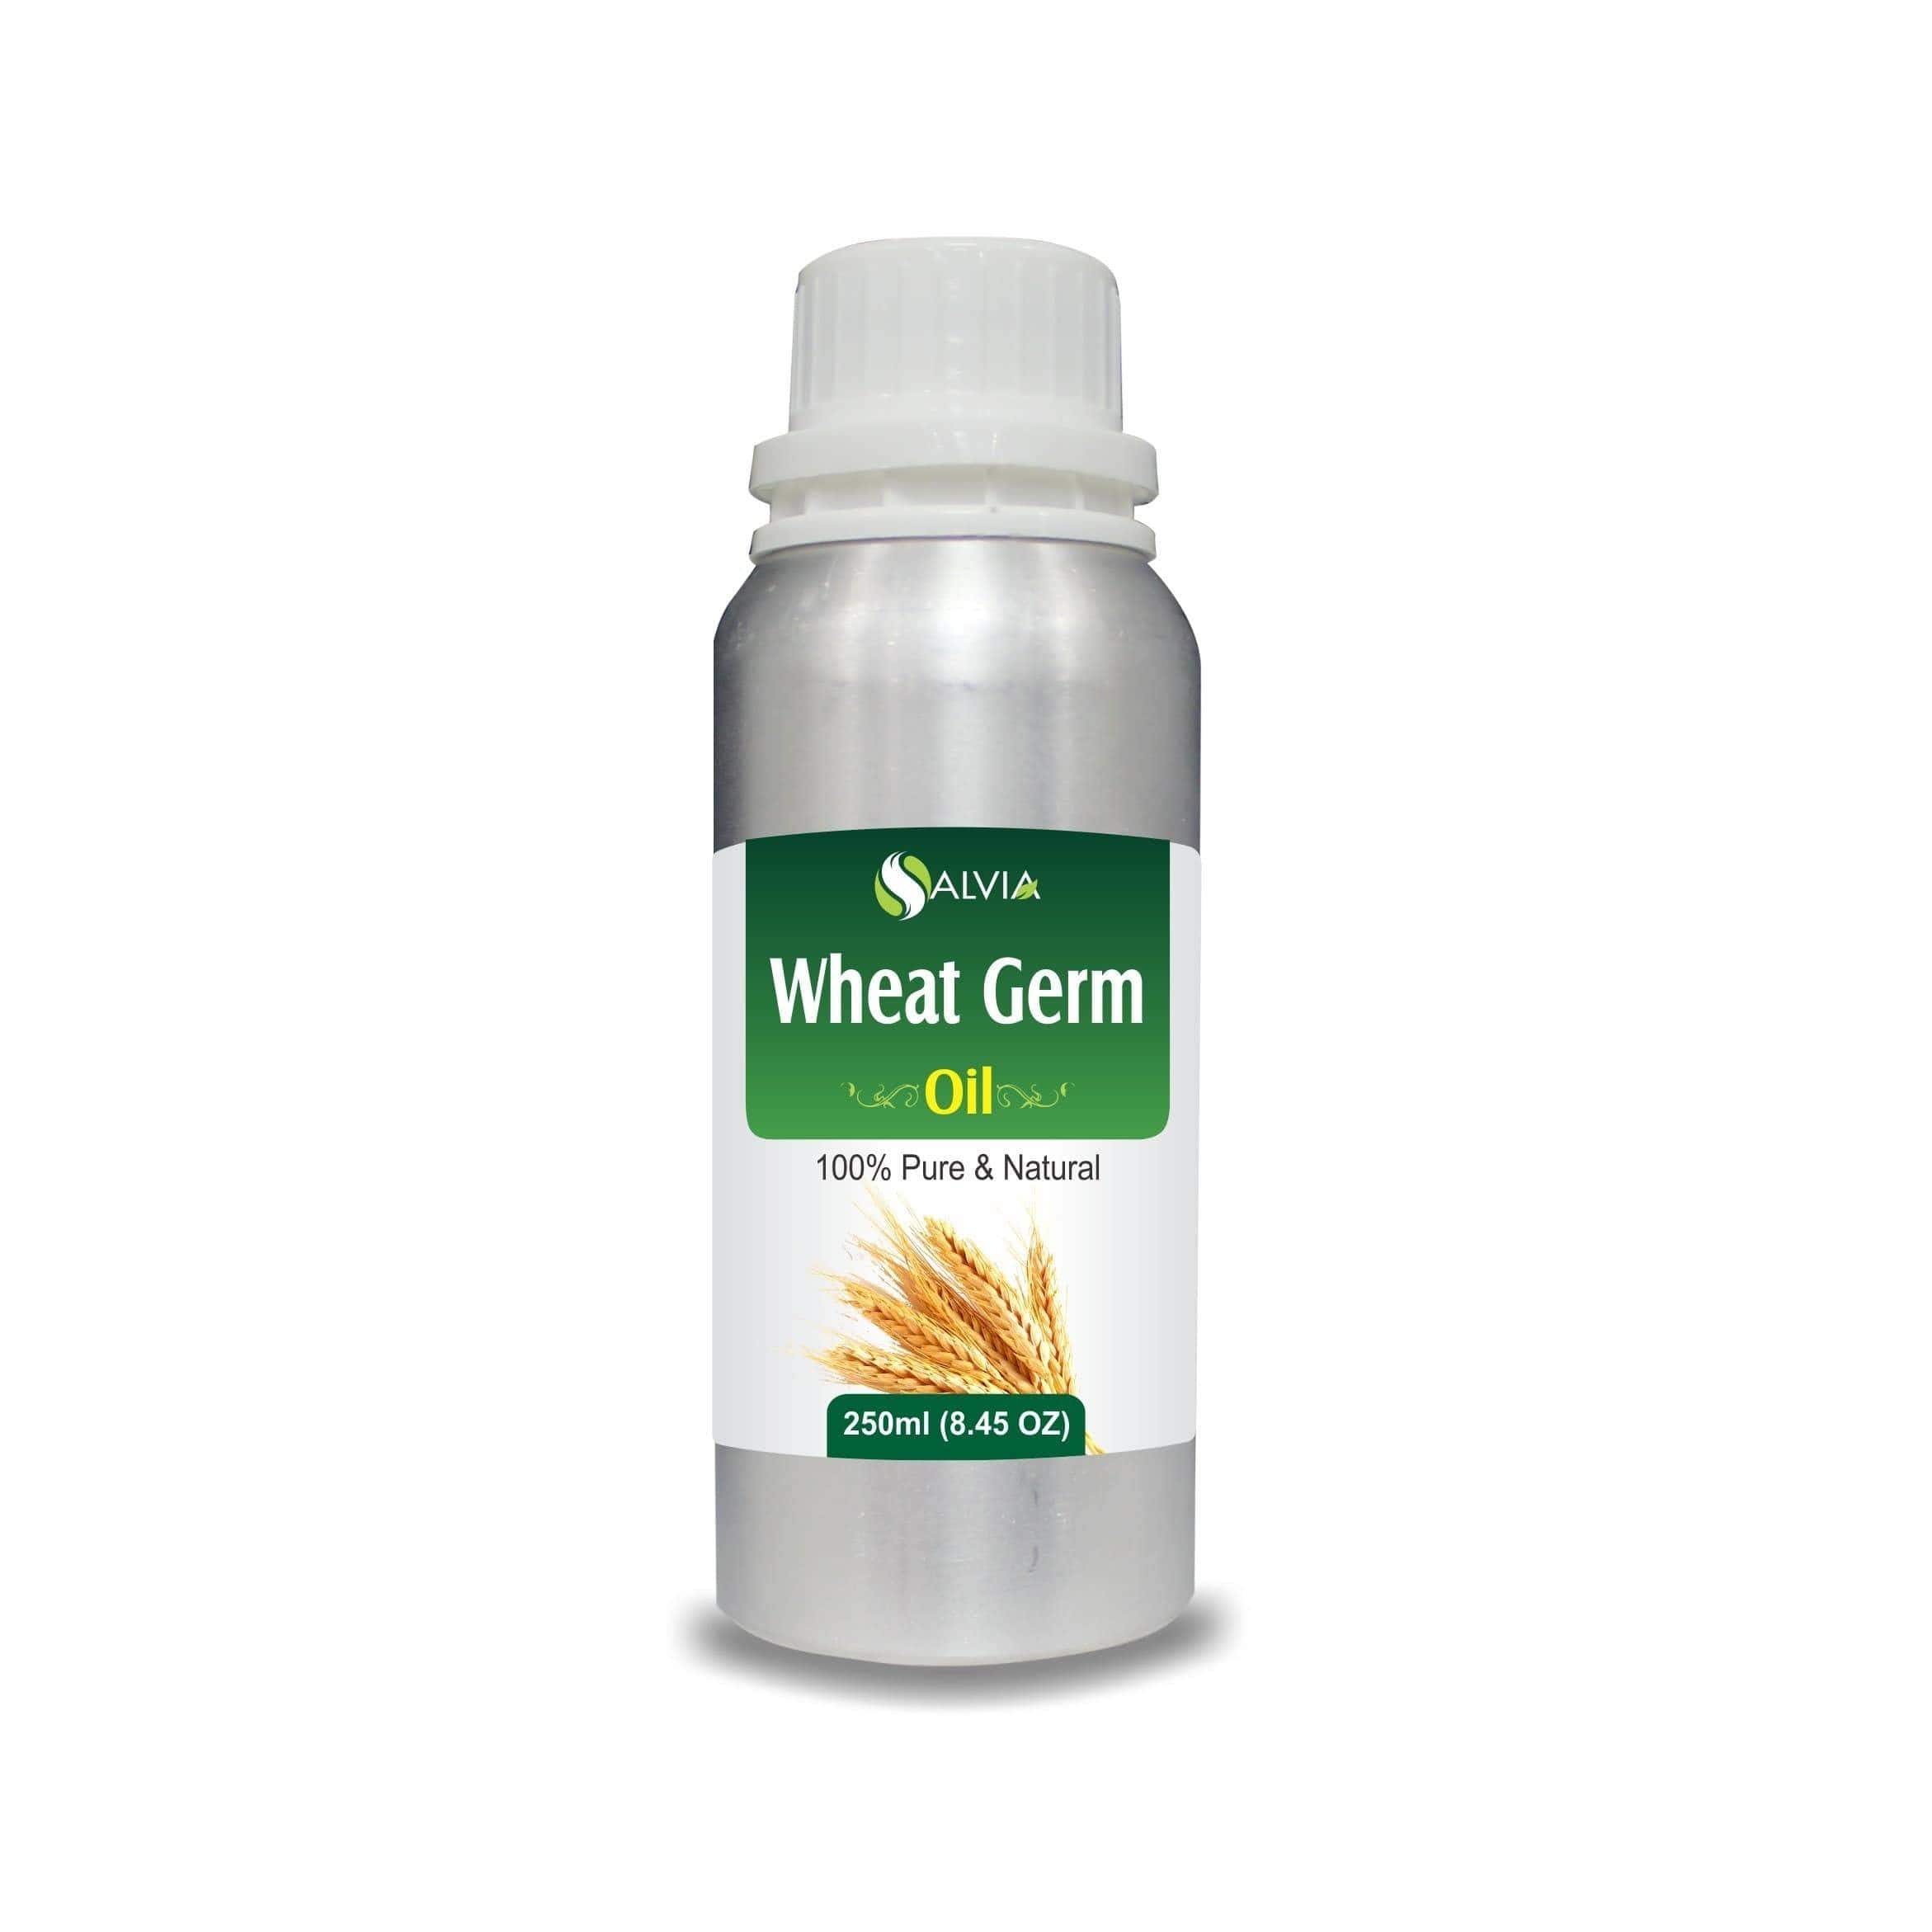 wheat germ oil uses